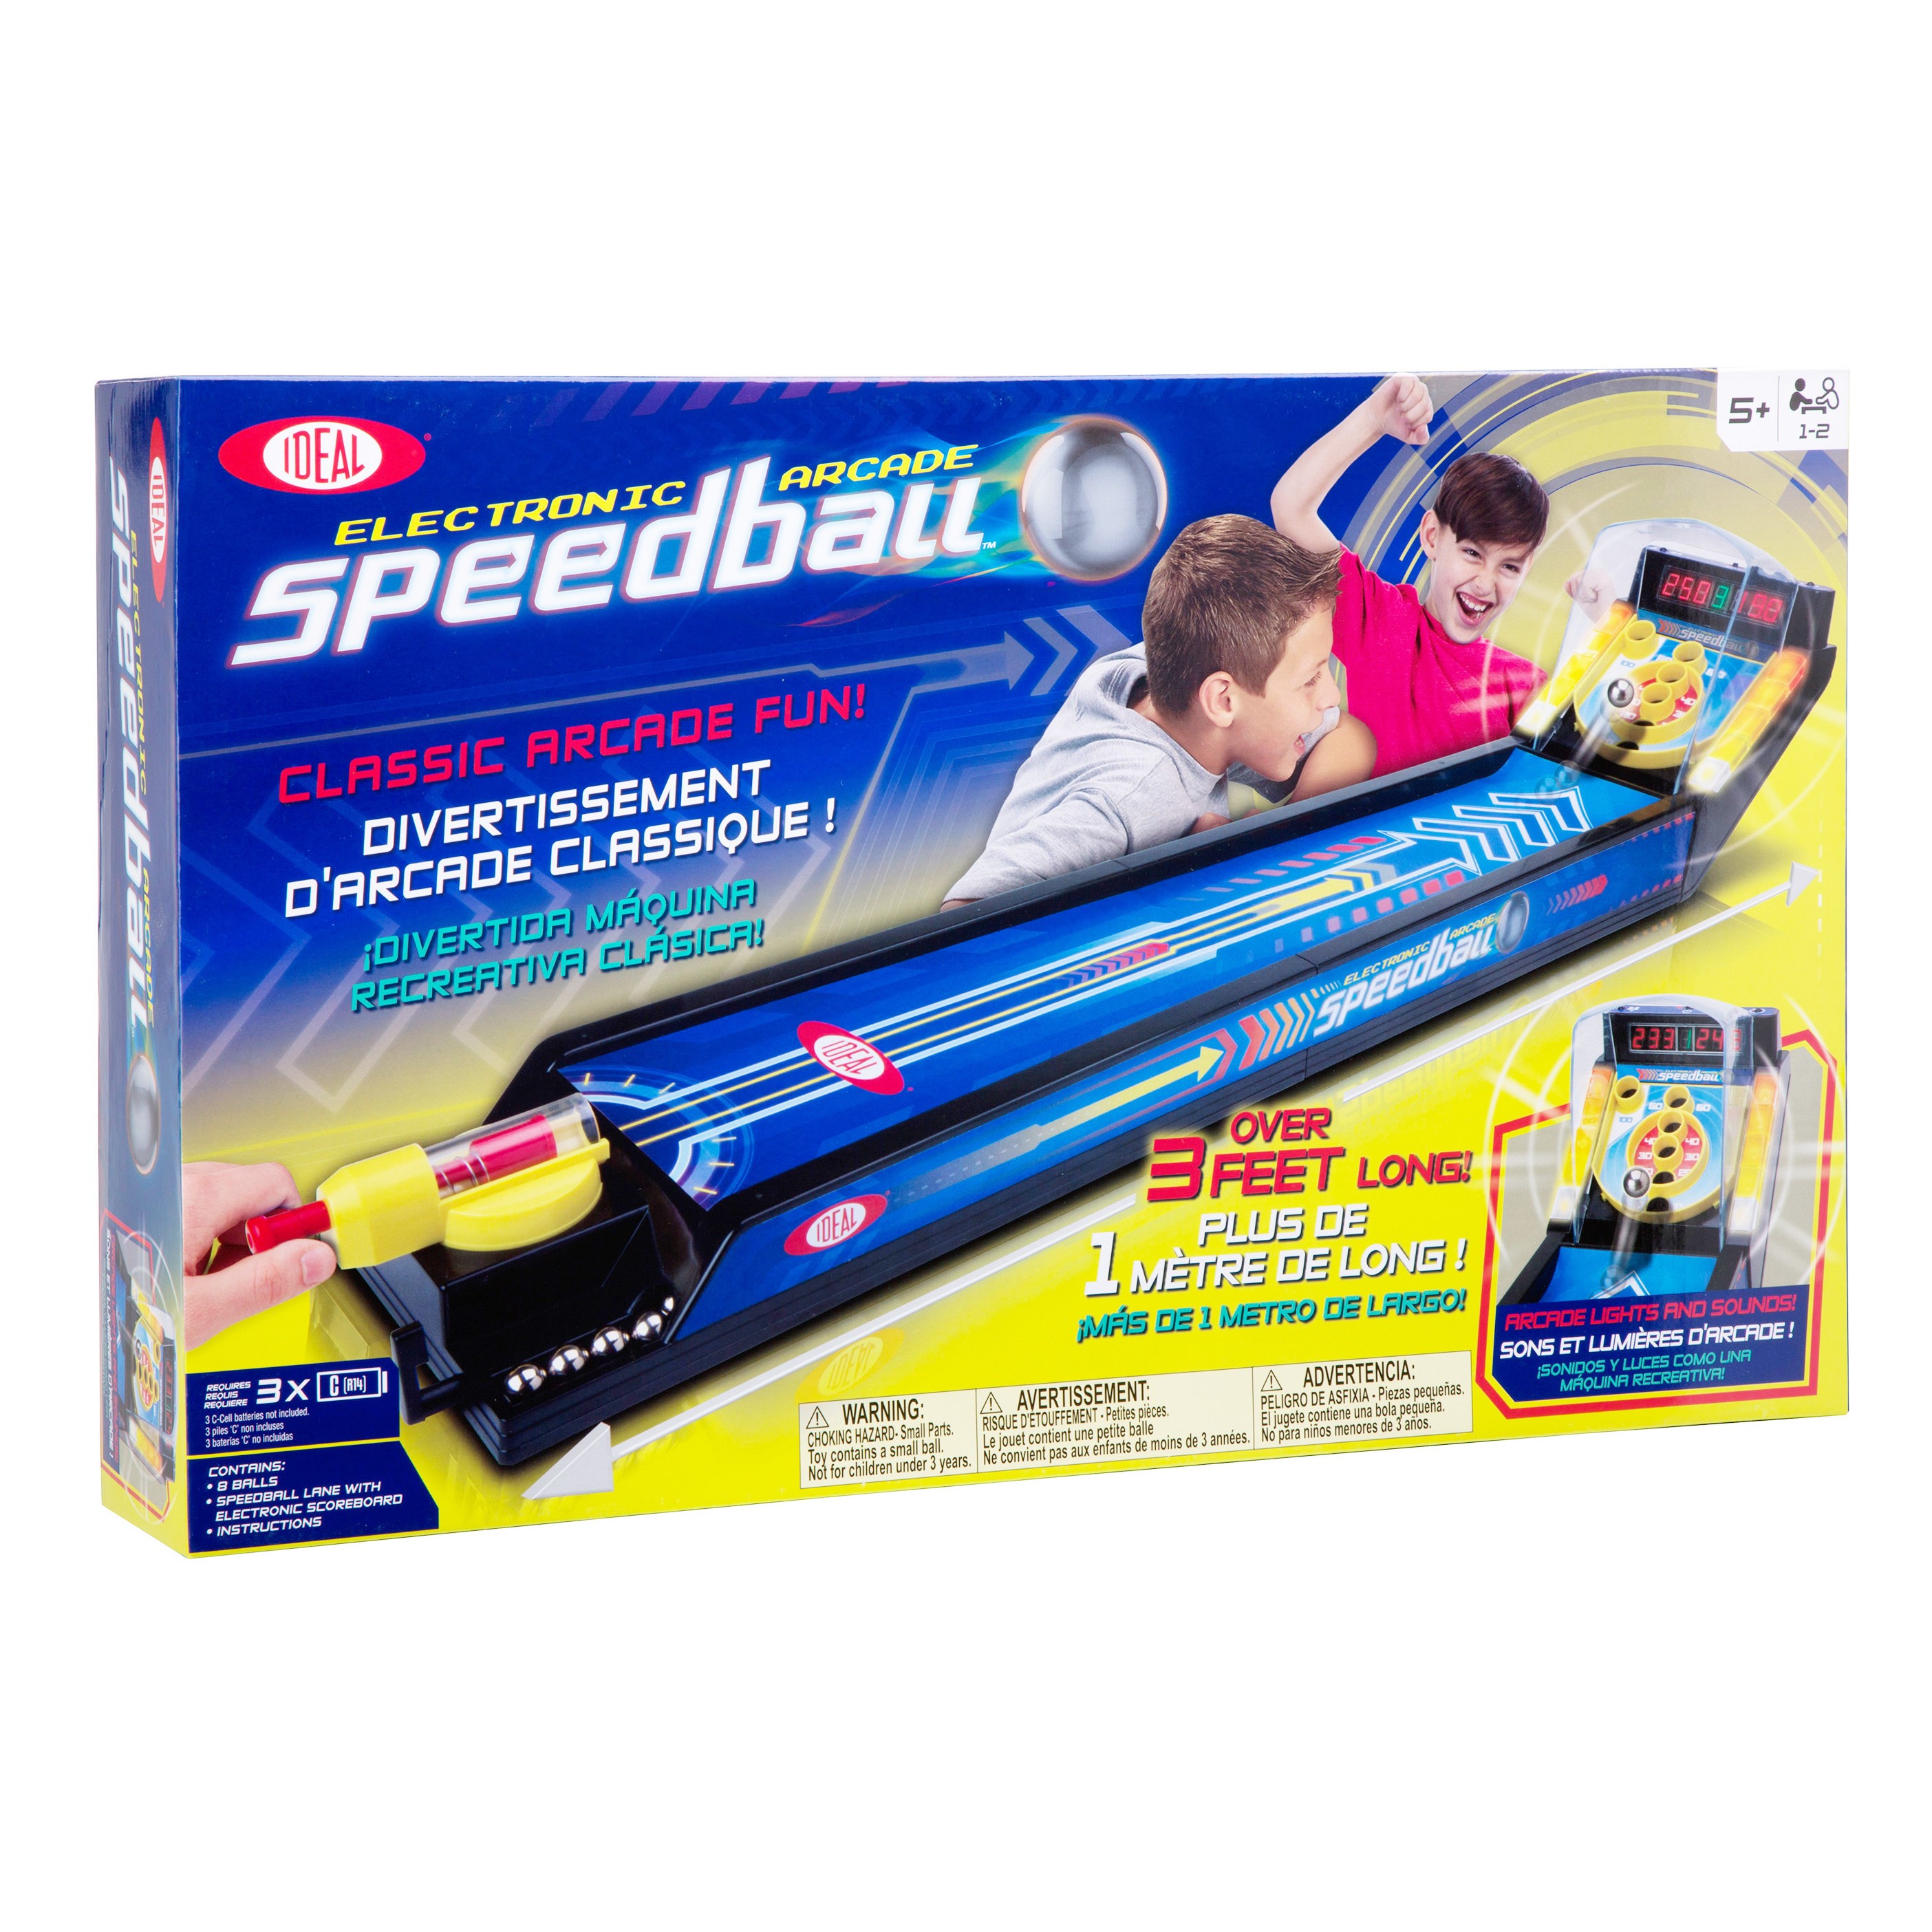 Ideal Electronic Arcade Speedball